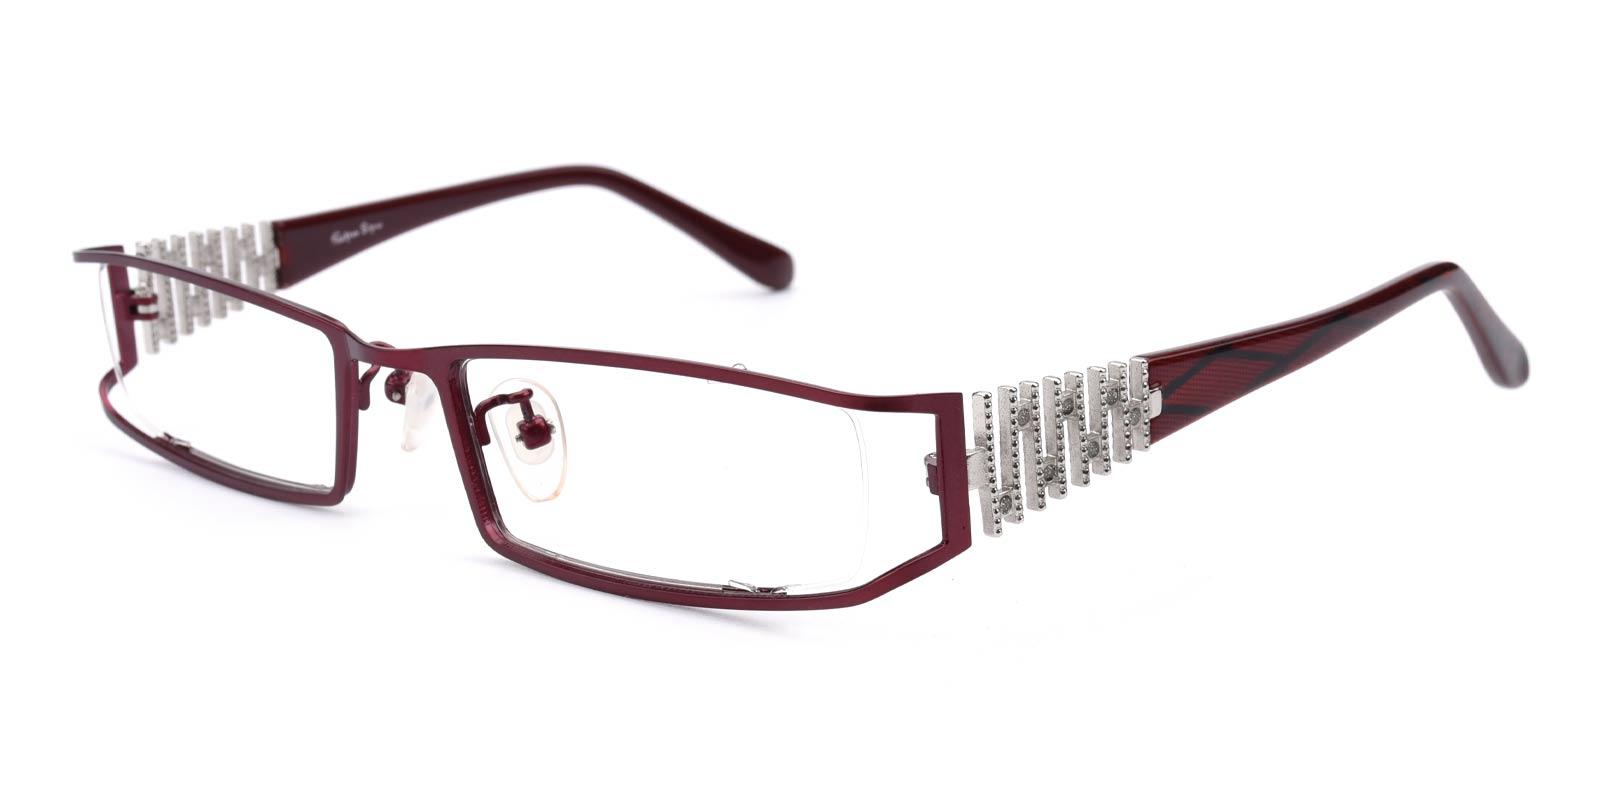 Little Rock Eyeglasses Cheap Prescription Glasses Online